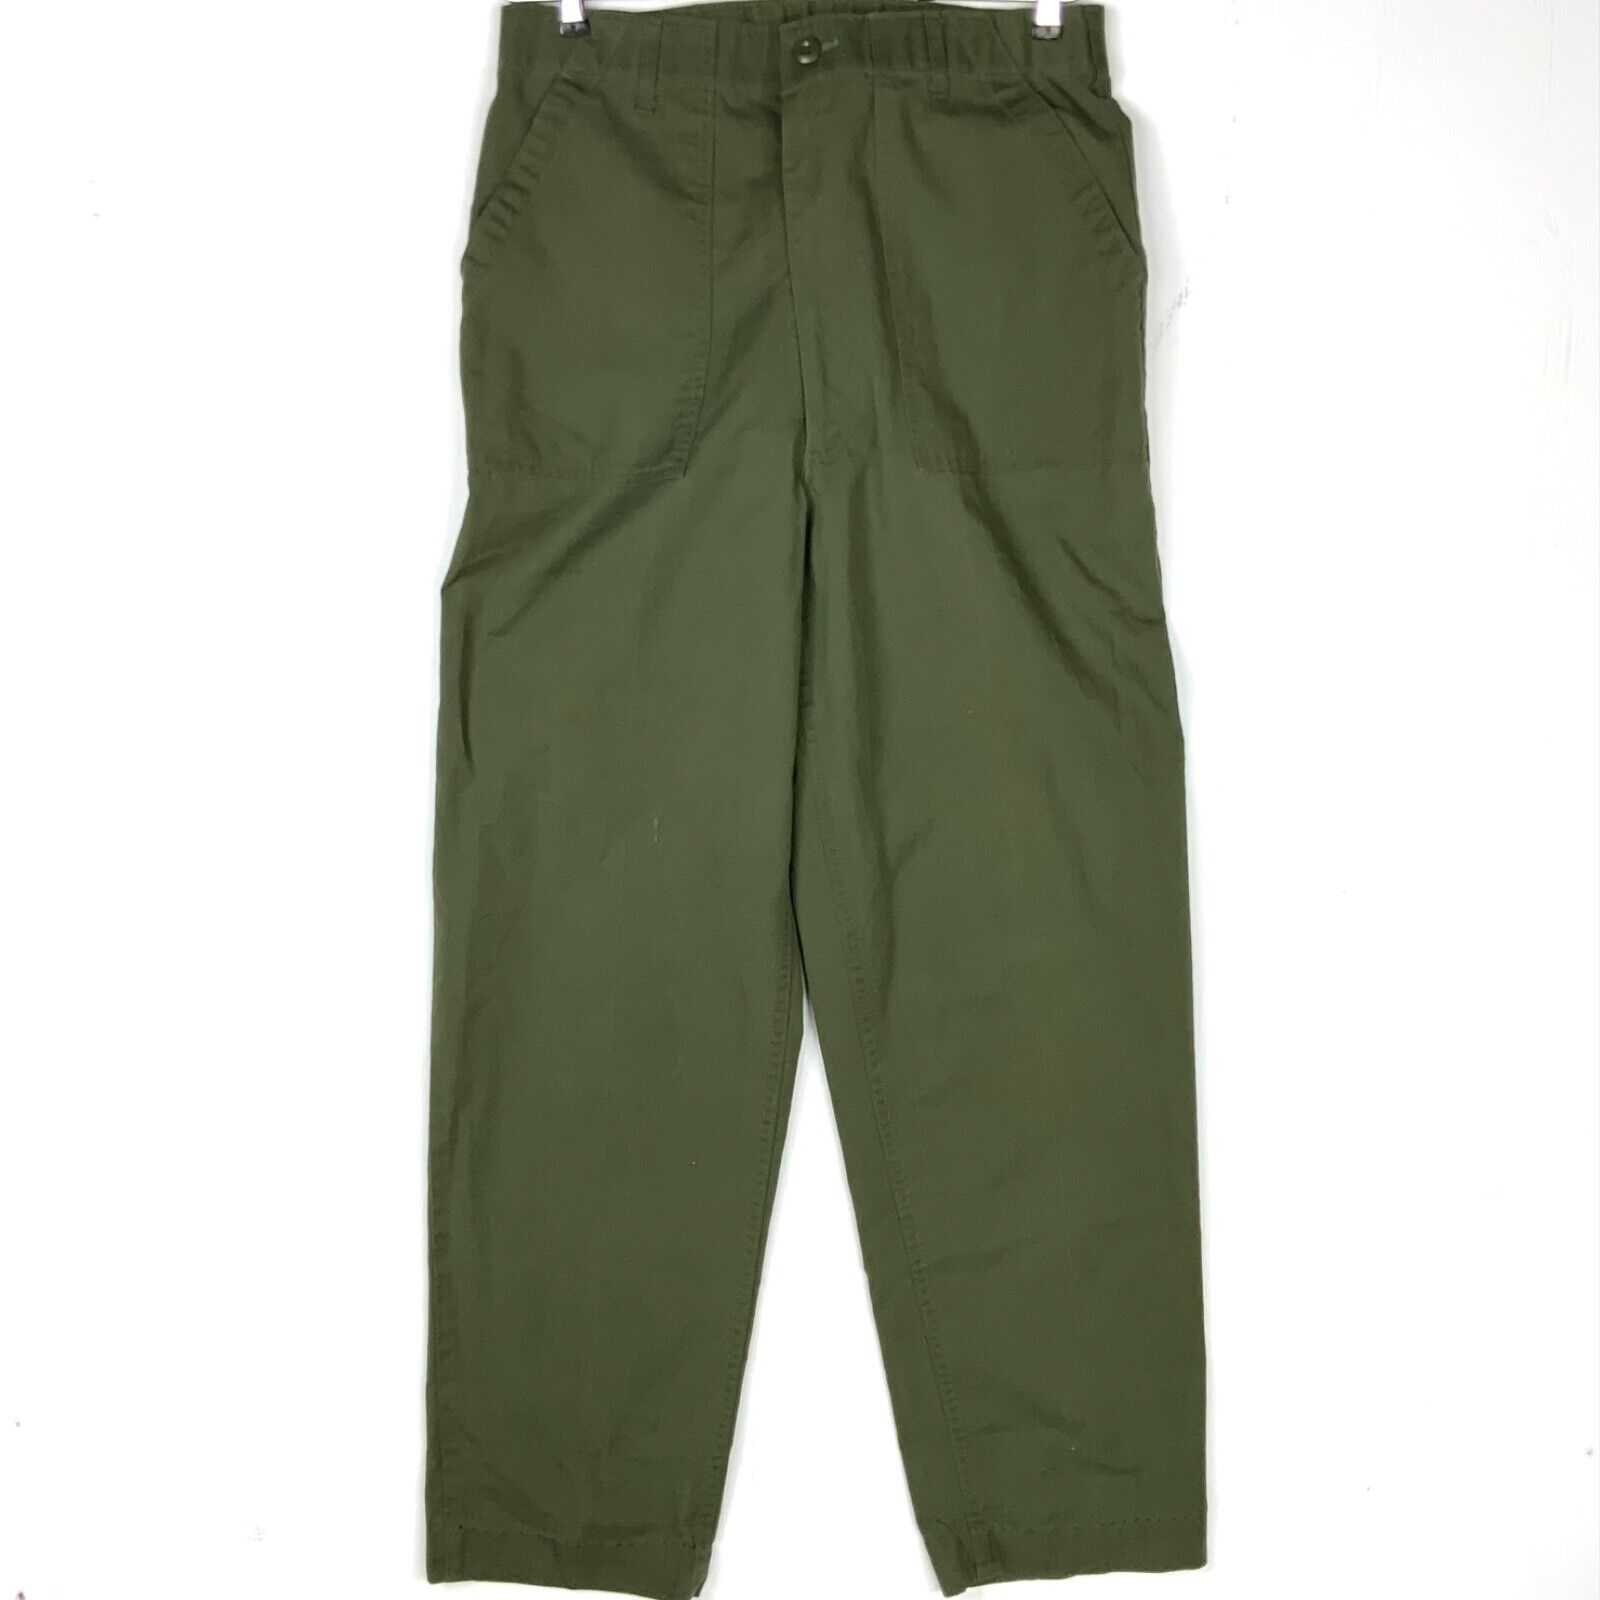 Vintage Military Og-107 Trousers Size 33 x 32 Green Vietnam Era 60s 70s